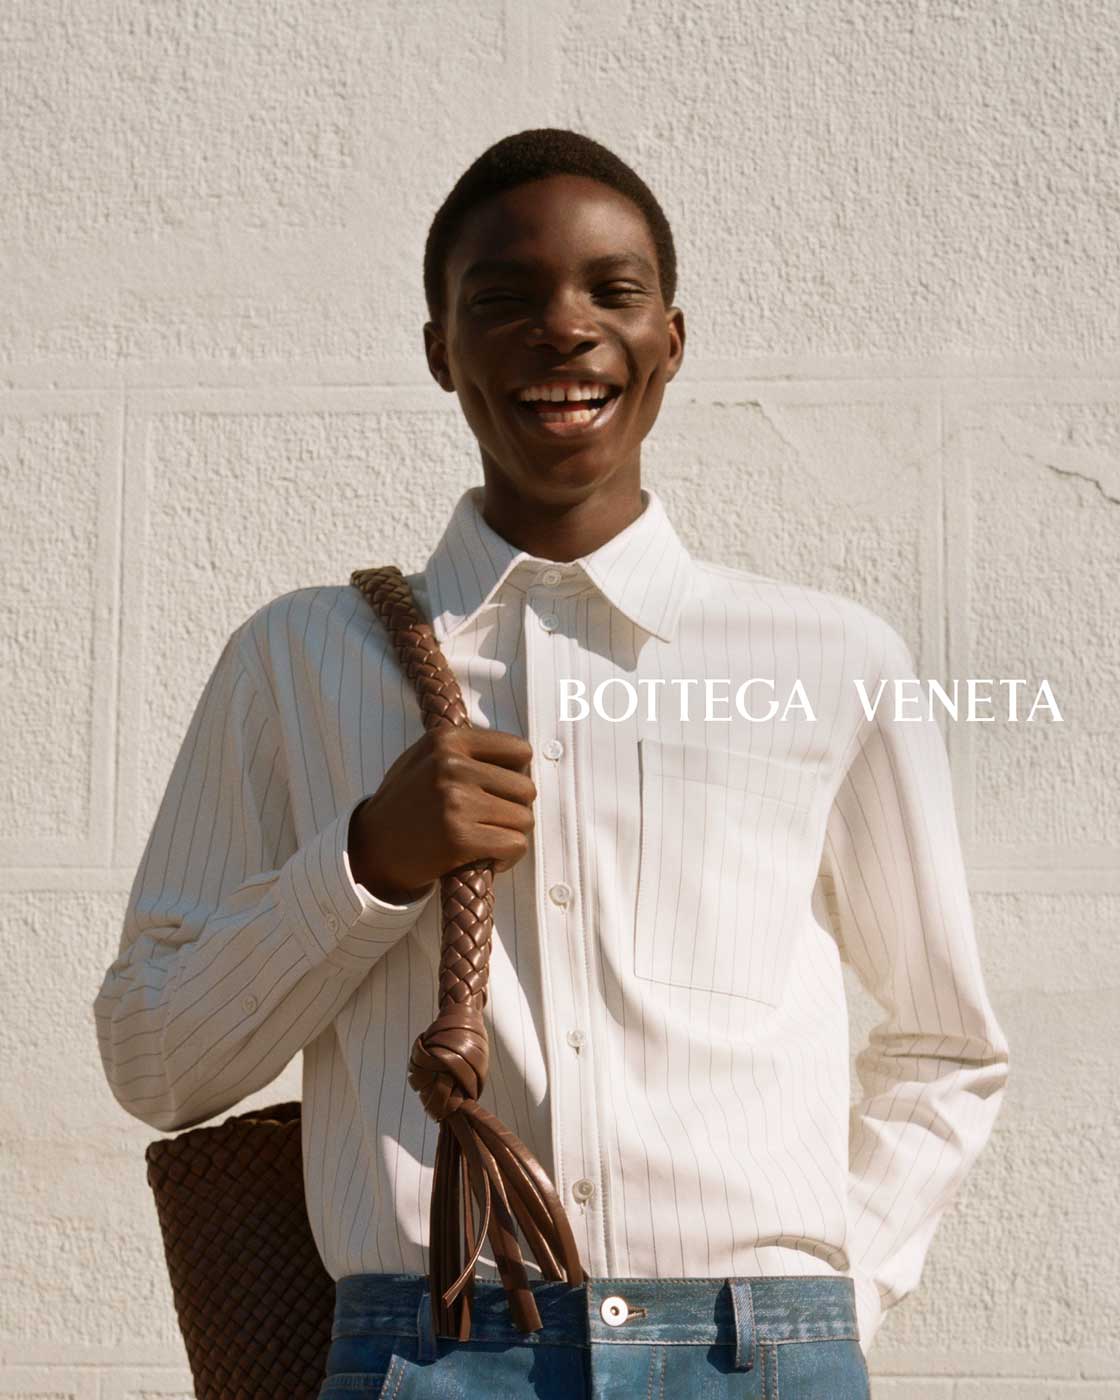 Bottega Veneta's latest campaign is the Fitzcarraldo Editions of